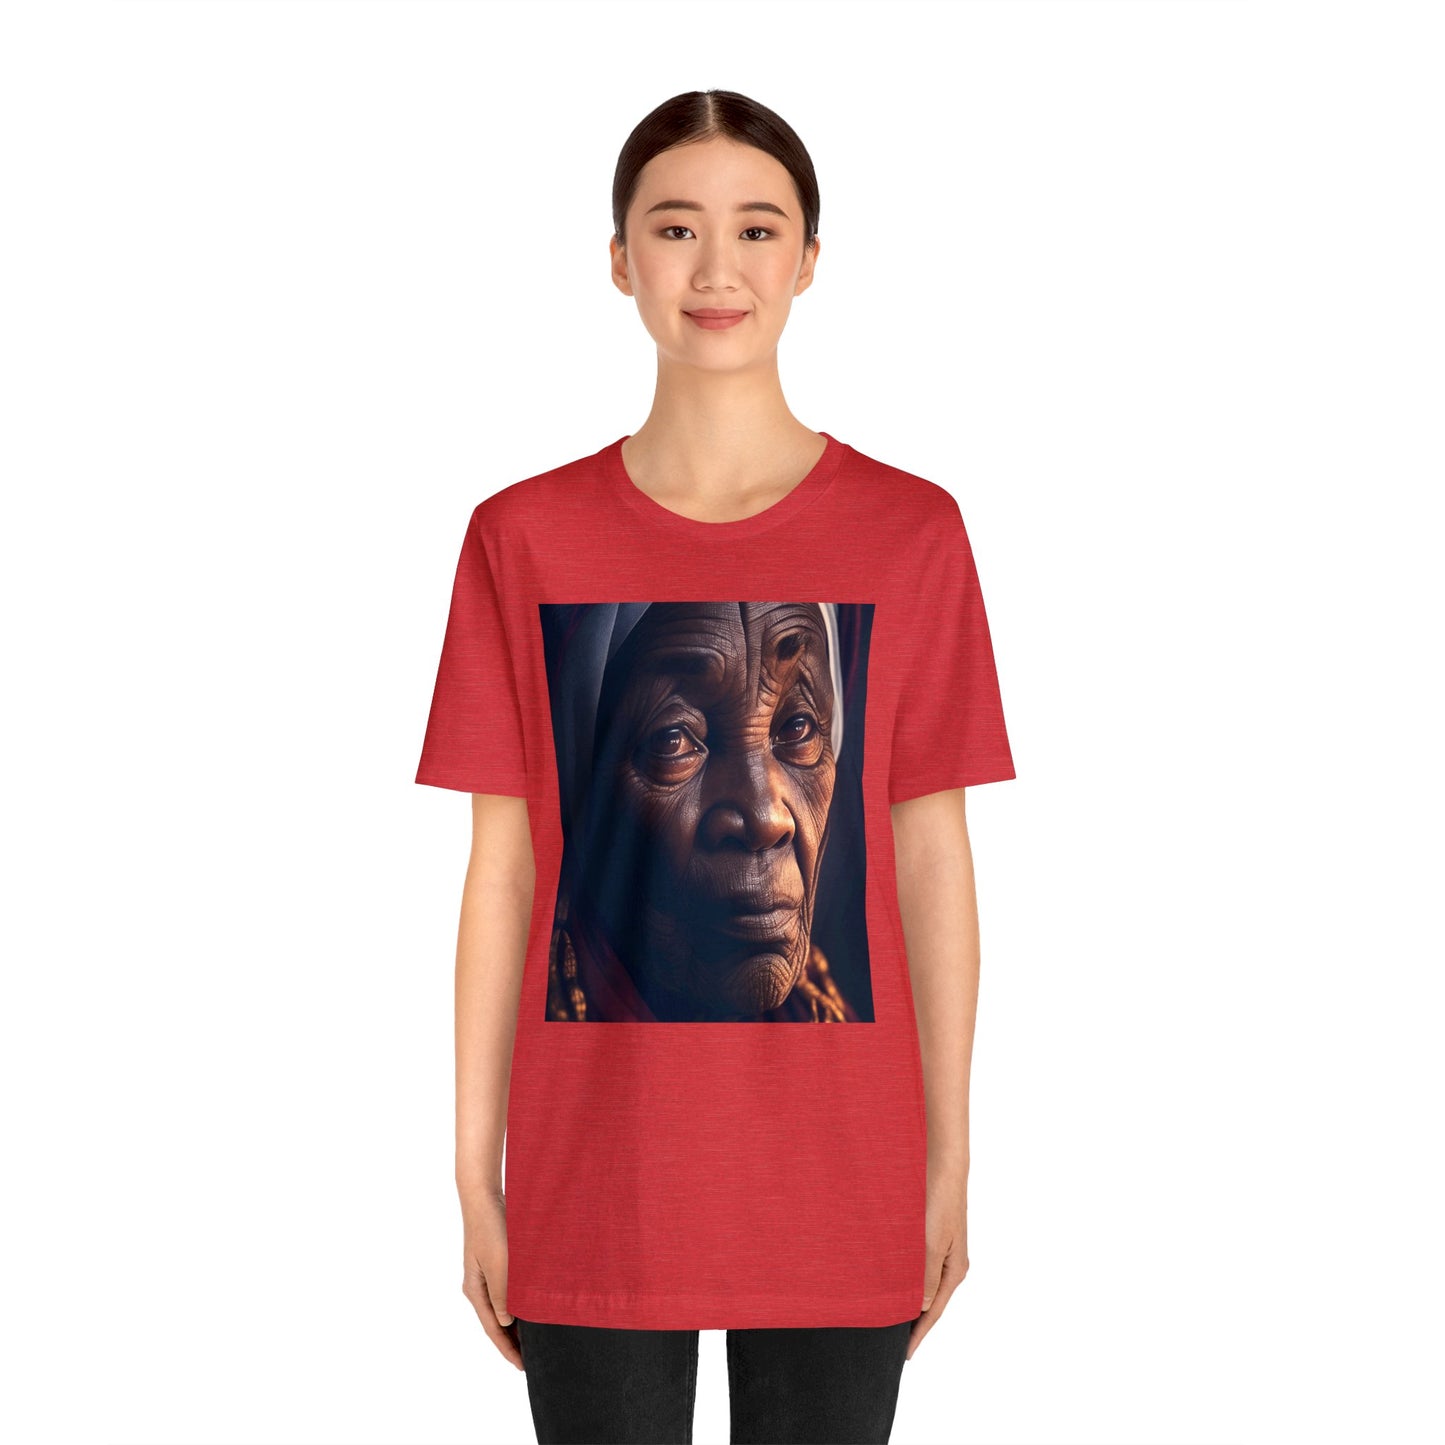 Wisdom's Face | African Woman | HD | Photorealistic | Unisex | Men's | Women's | Tee | T-Shirt